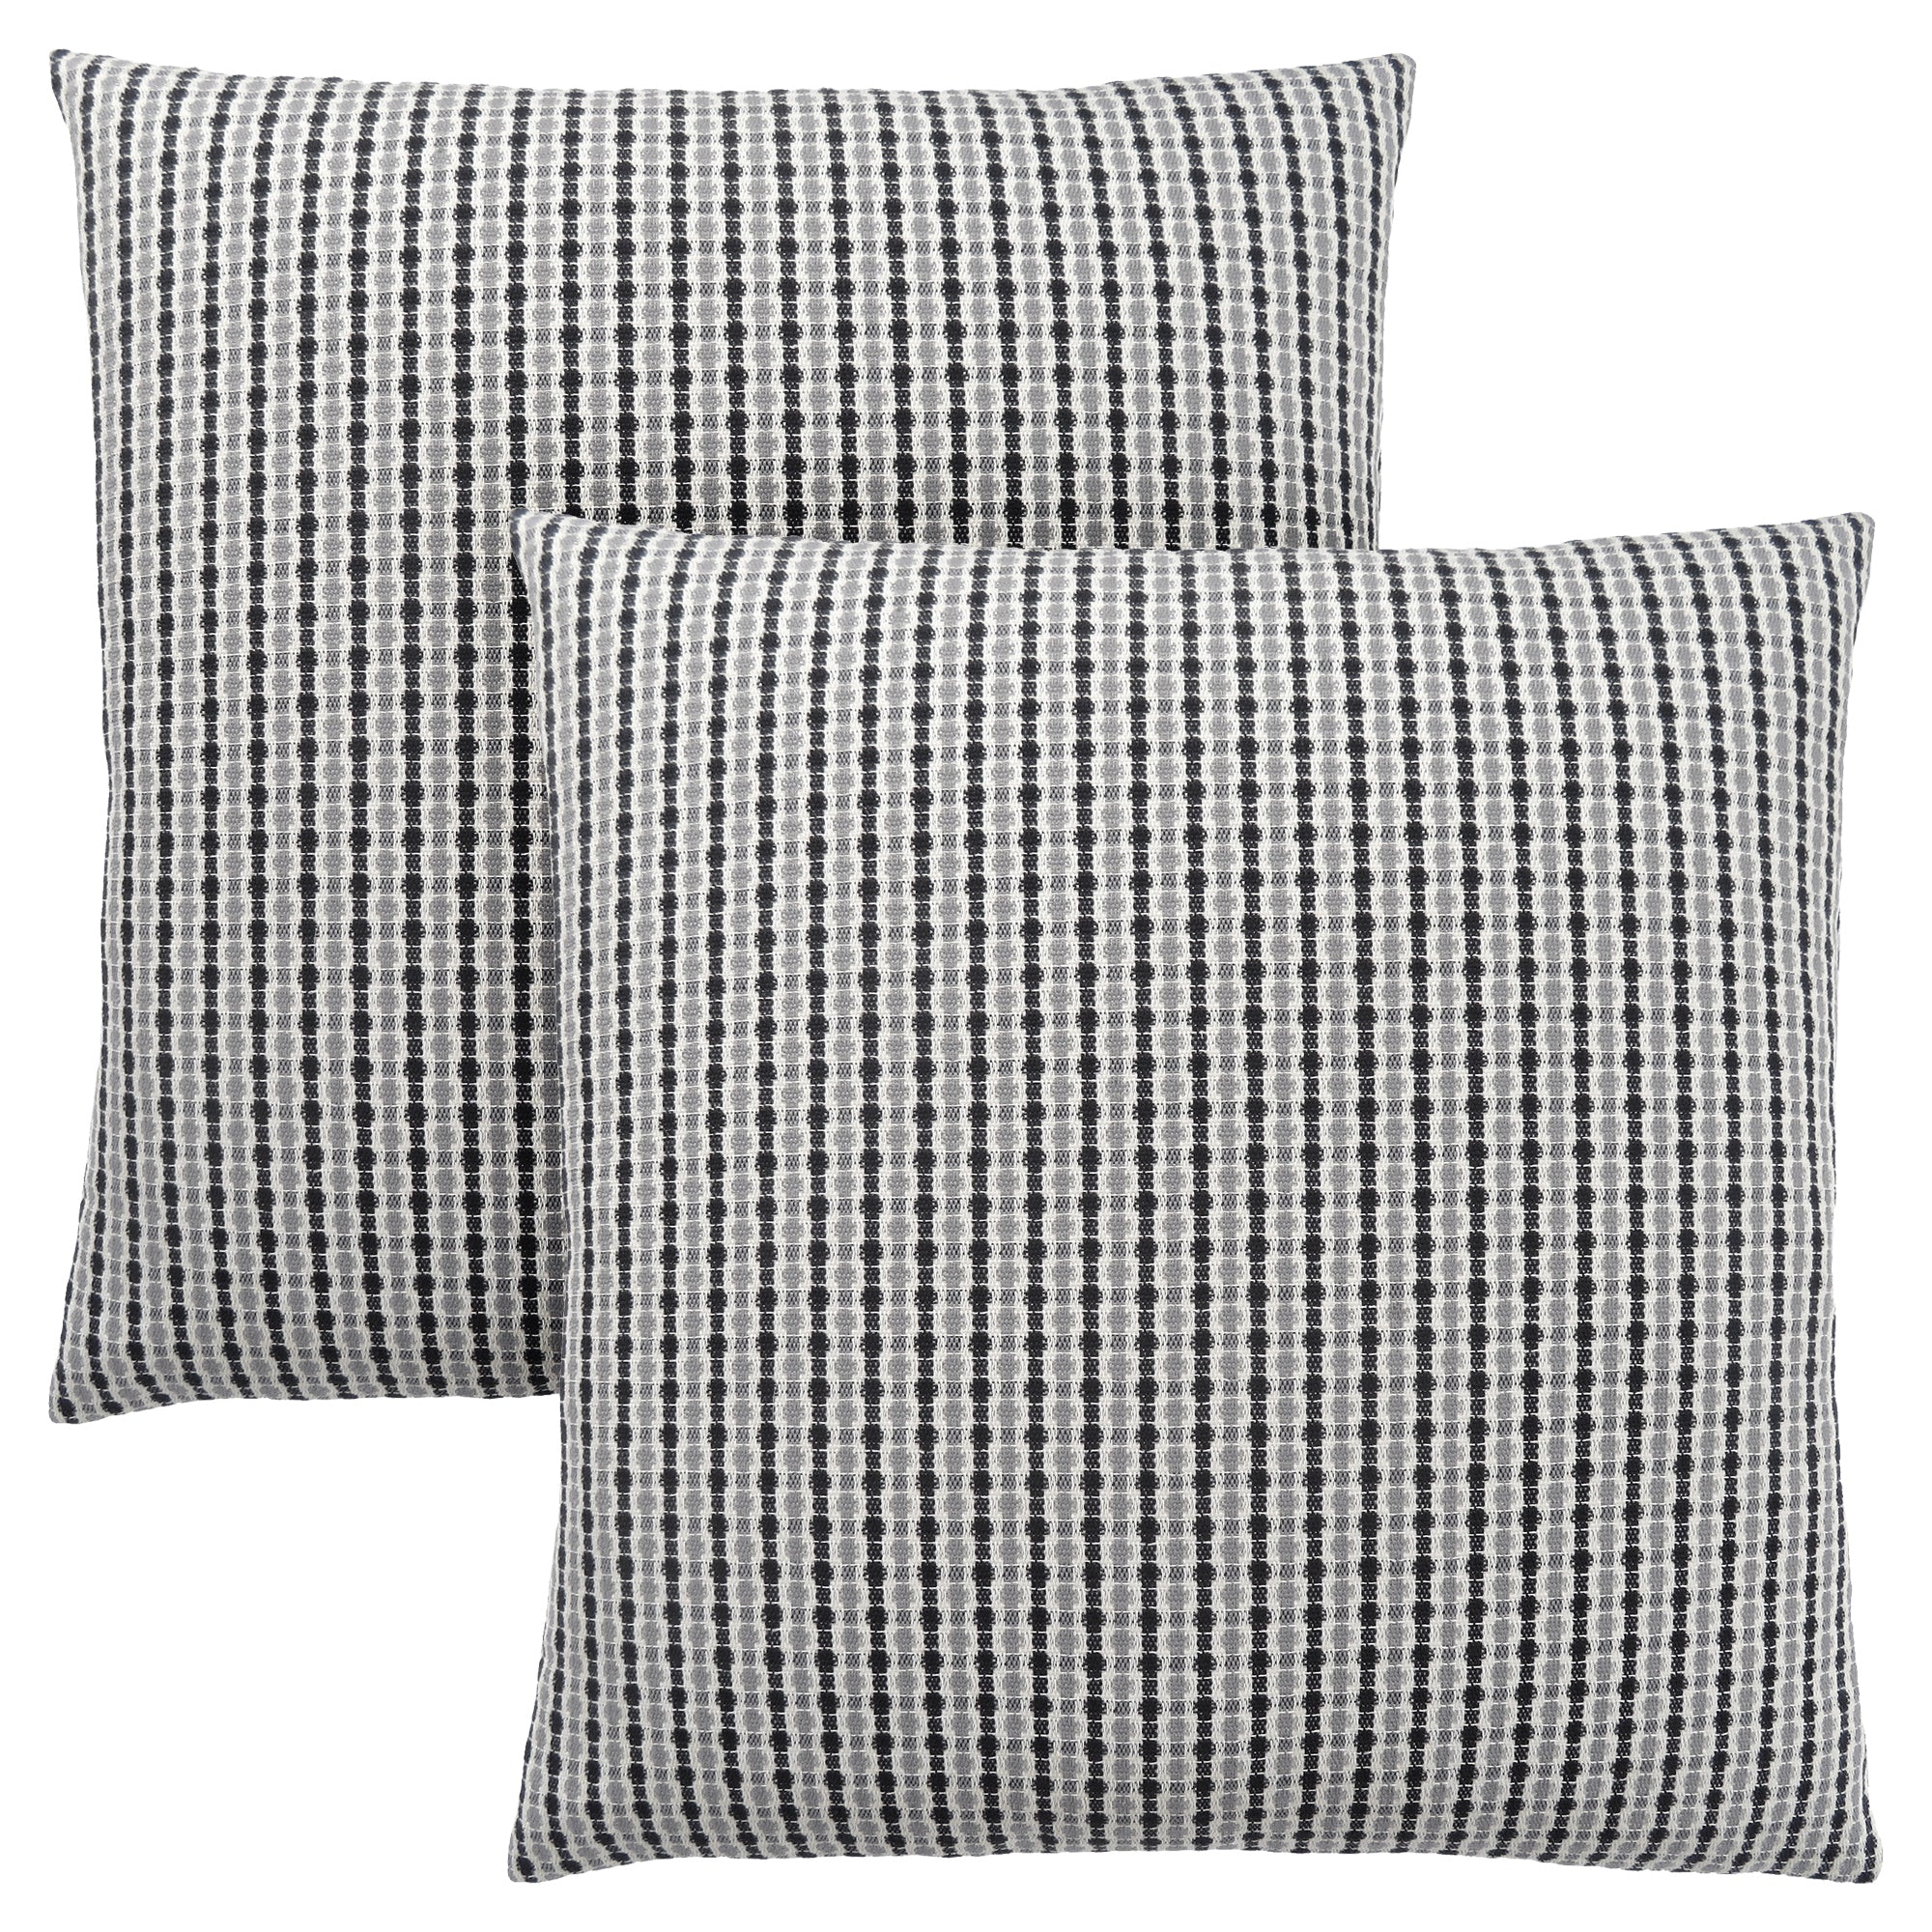 Pillow - 18X 18 / Light Grey / Black Abstract Dot/ 2Pcs